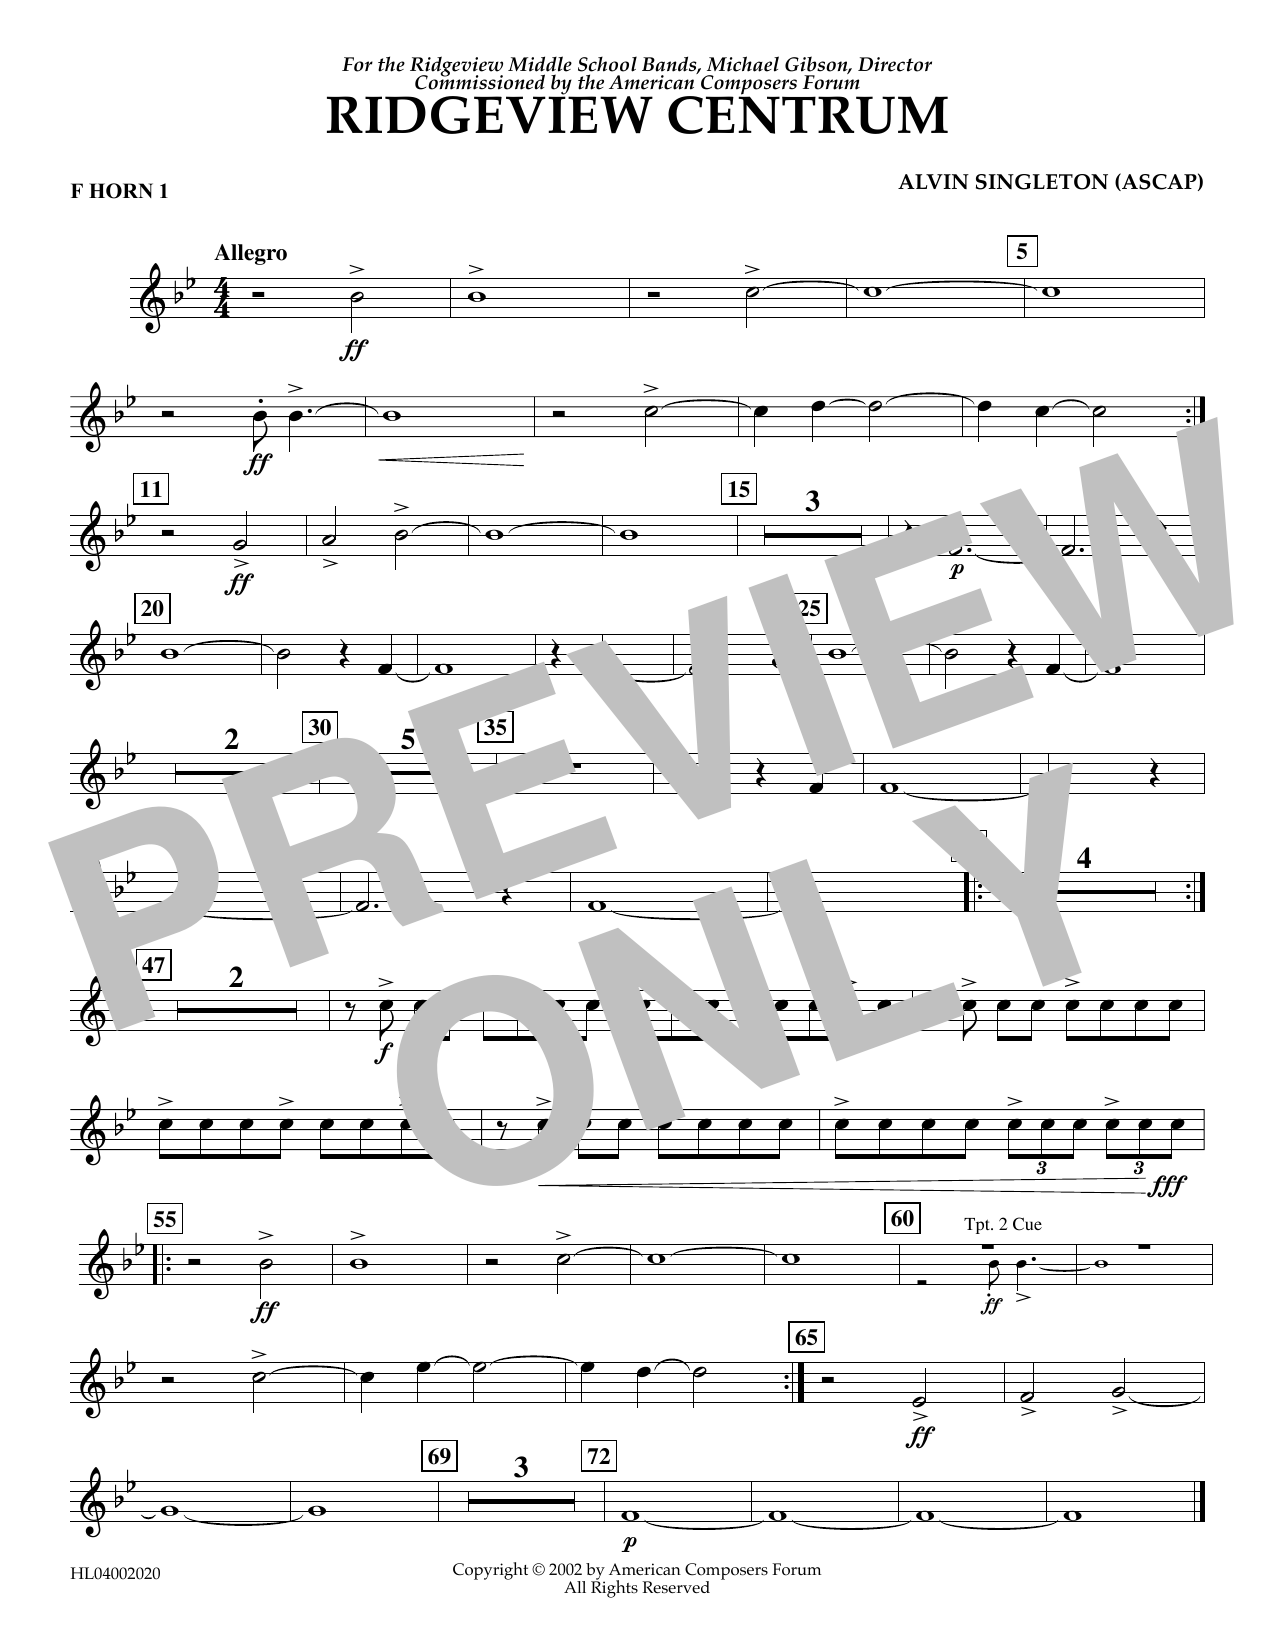 Download Alvin Singleton Ridgeview Centrum - F Horn 1 Sheet Music